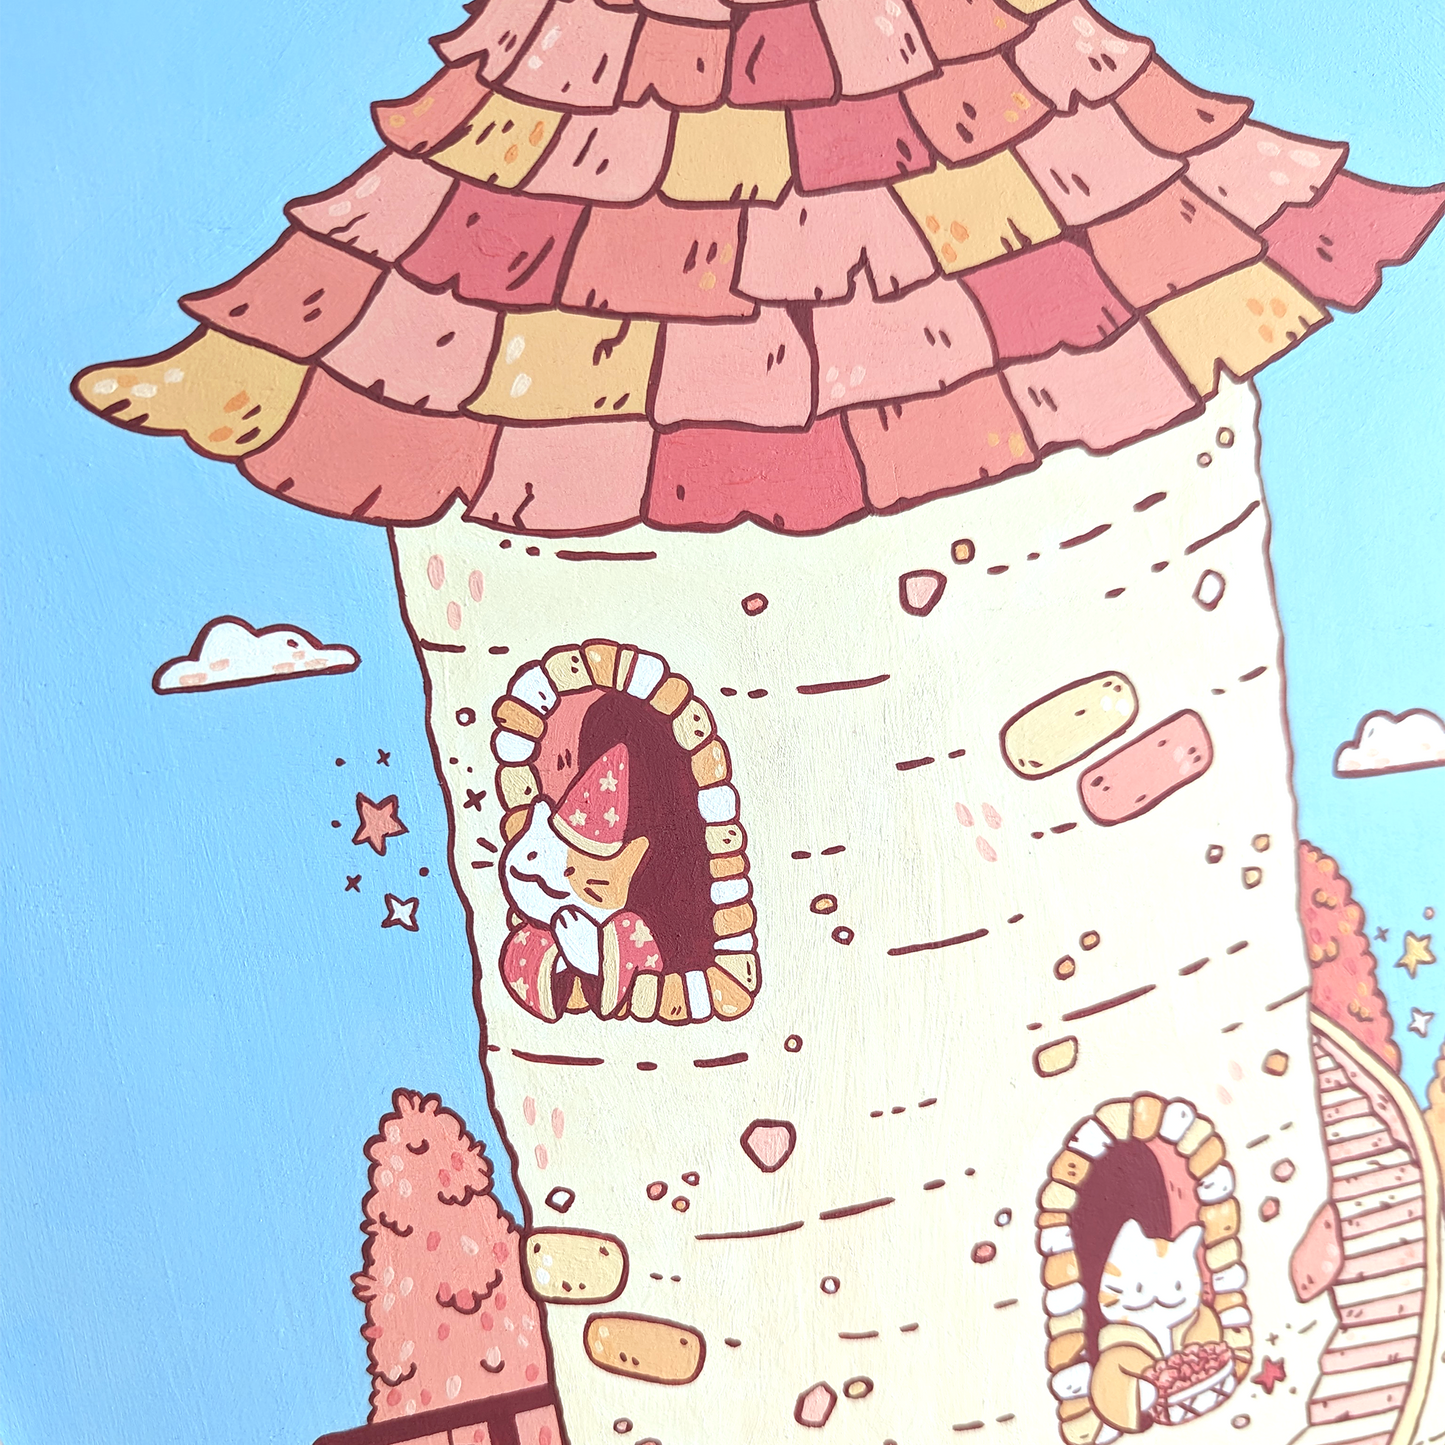 Meowgical Tower Original Painting